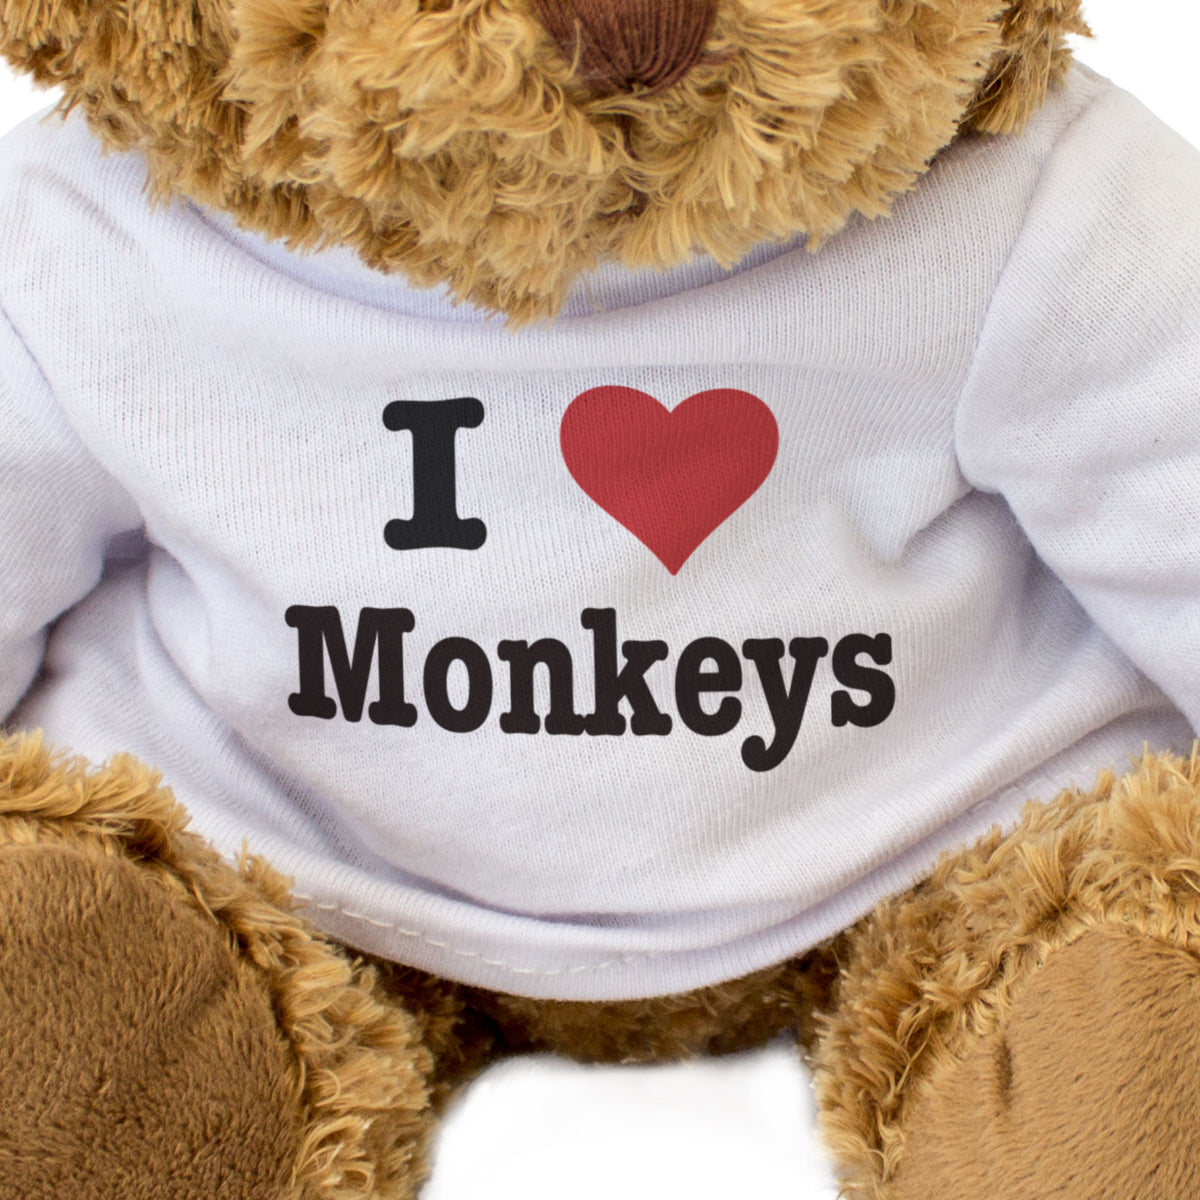 I Love Monkeys - Teddy Bear